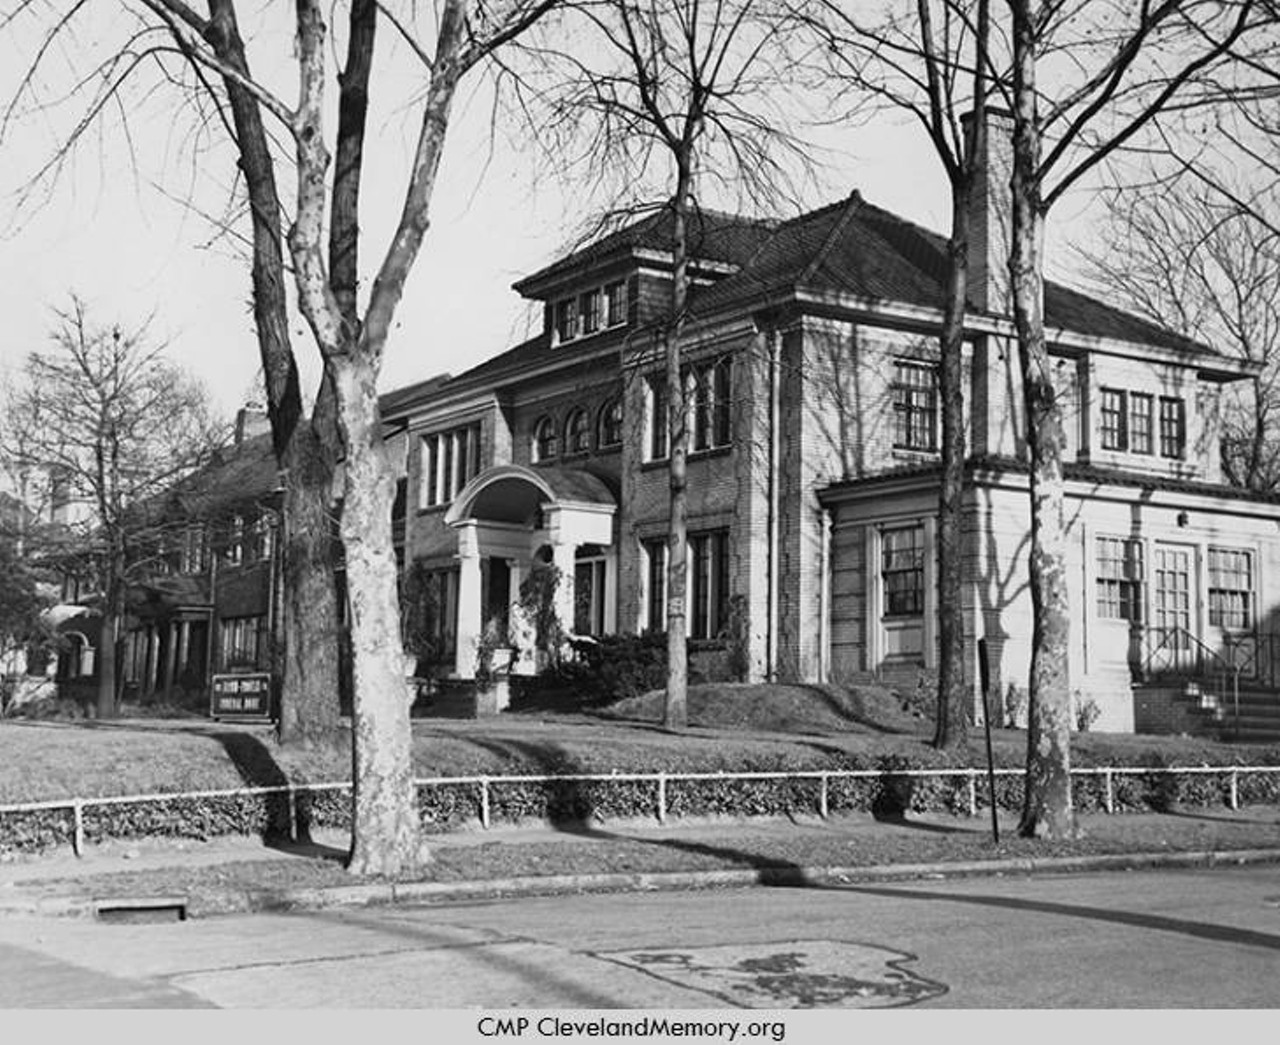  Dead Men's Row, Funeral Homes Along Euclid Avenue, 1941 